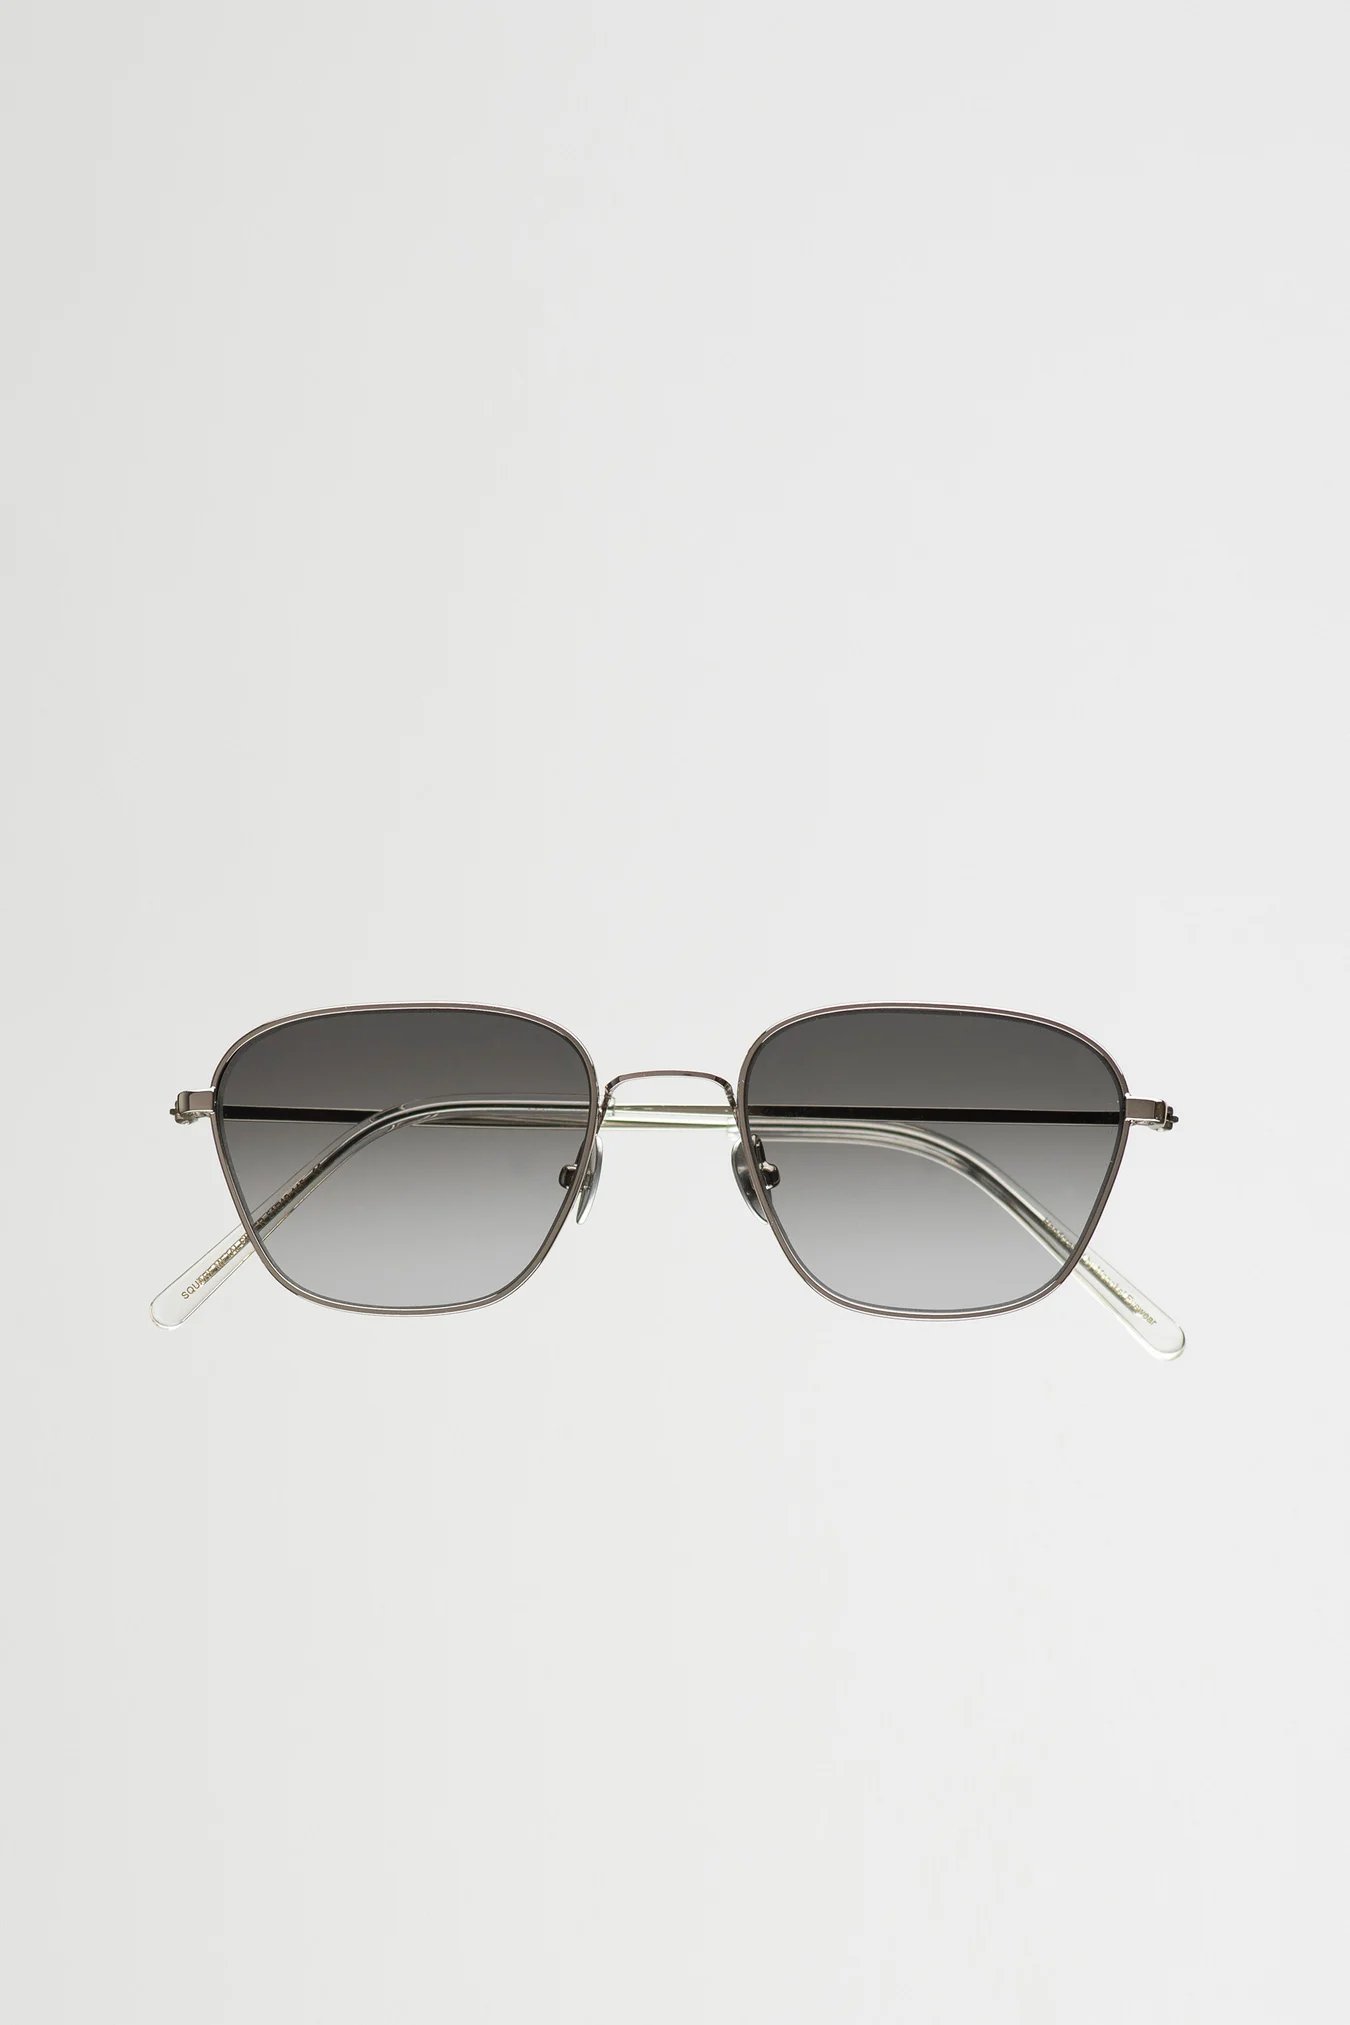 Monokel Eyewear Otis Silver - Grey Gradient Lens Sunglasses 